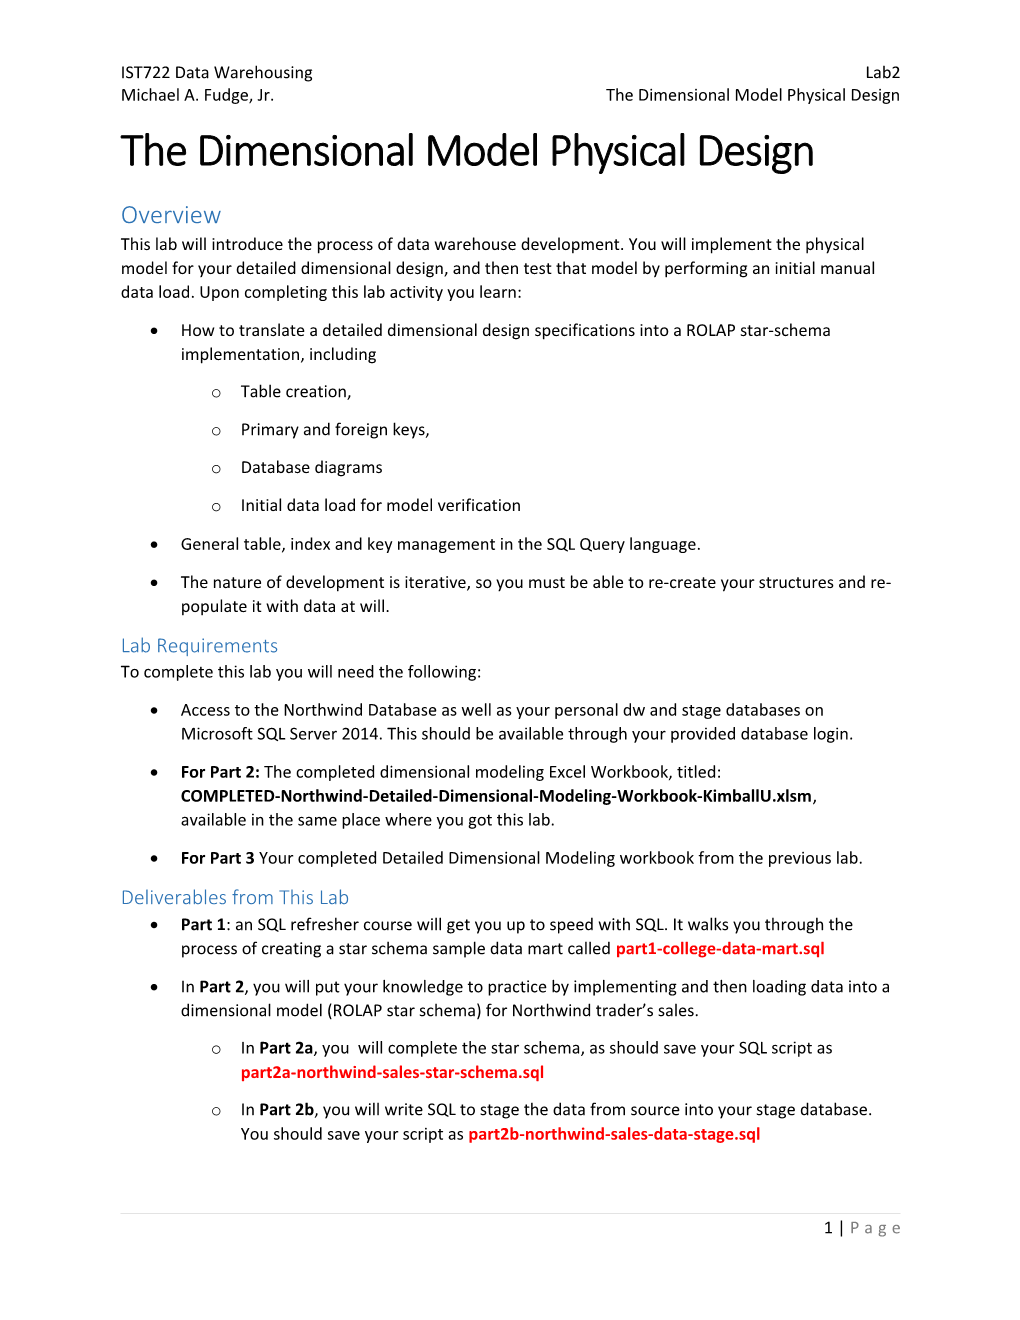 Michael A. Fudge, Jr.The Dimensional Model Physical Design